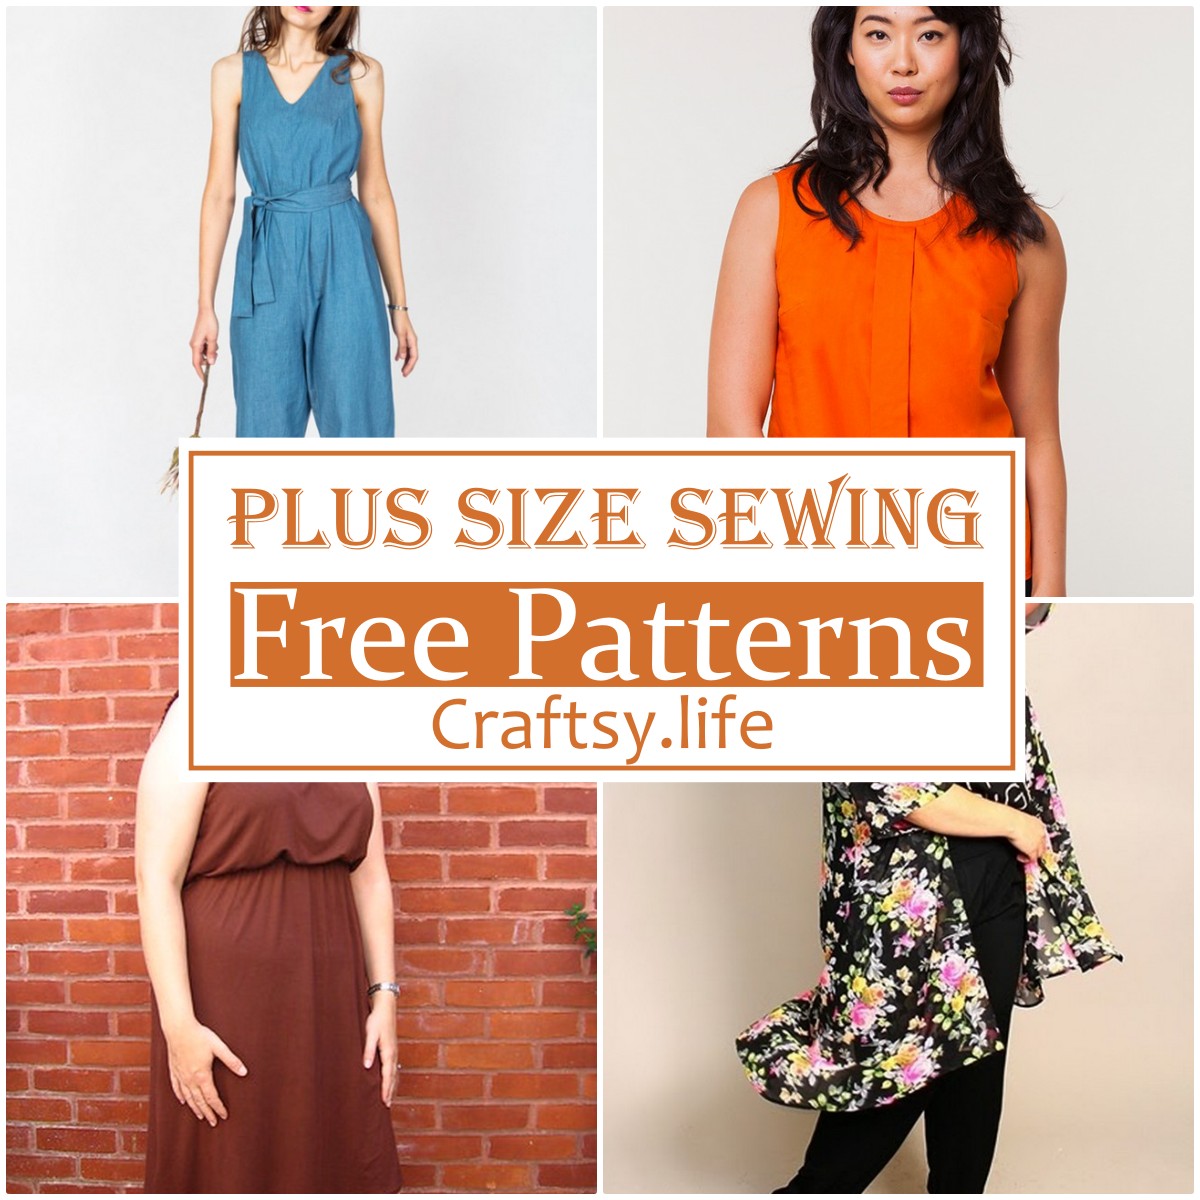 Free Plus Size Sewing Patterns